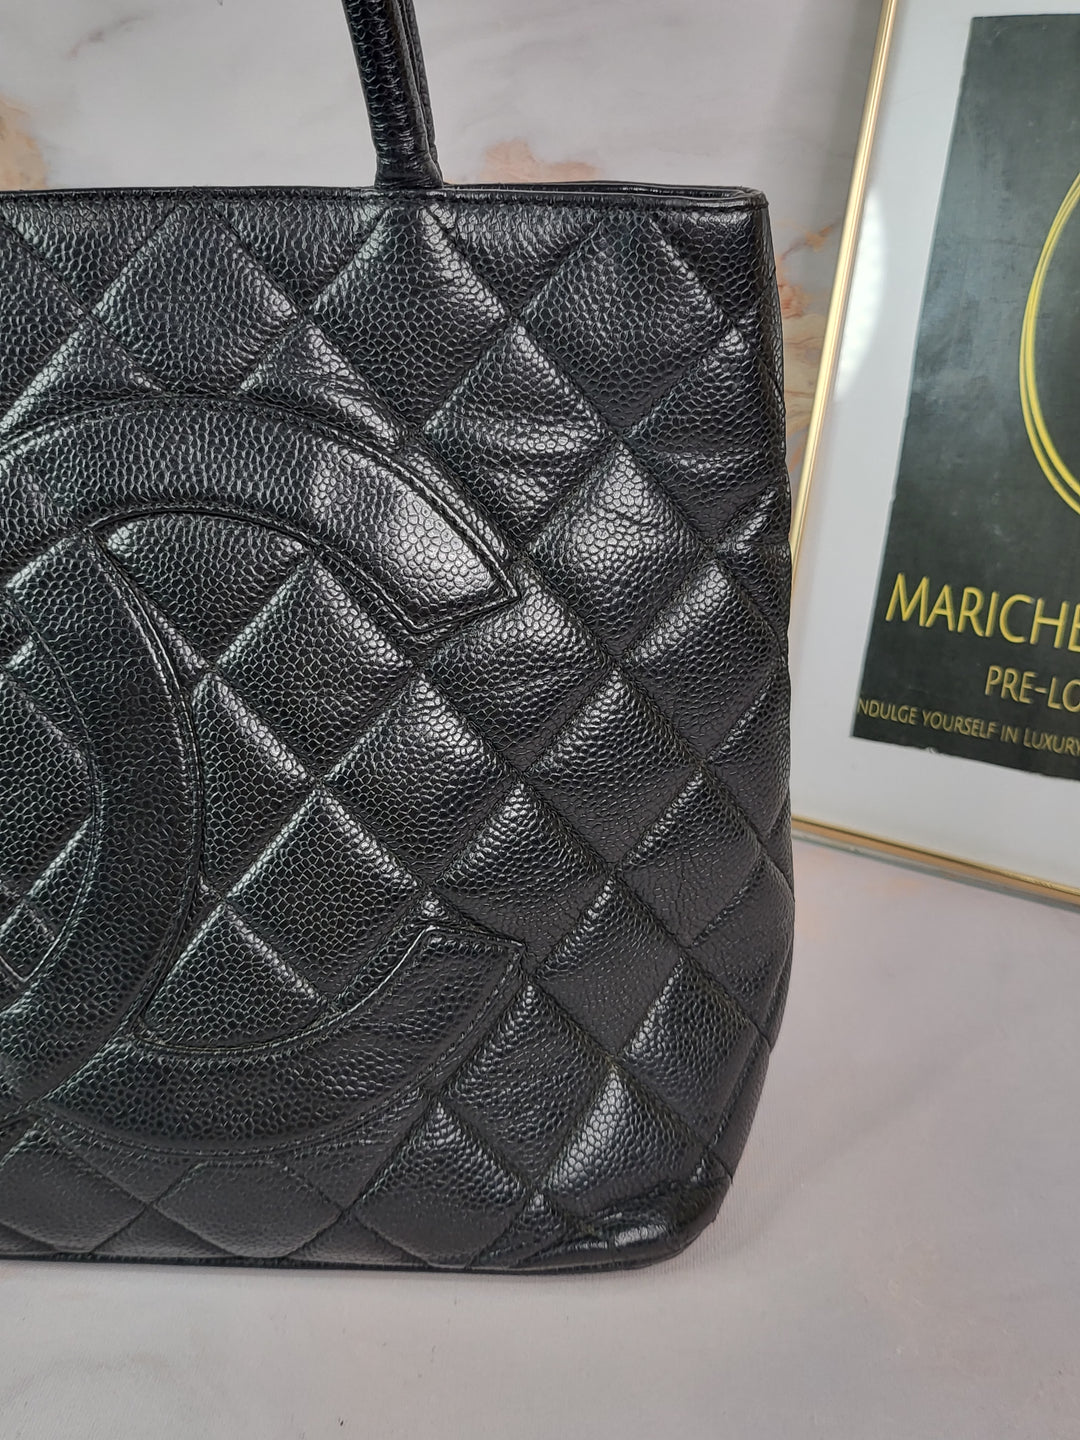 Chanel Caviar Medallion Tote Bag